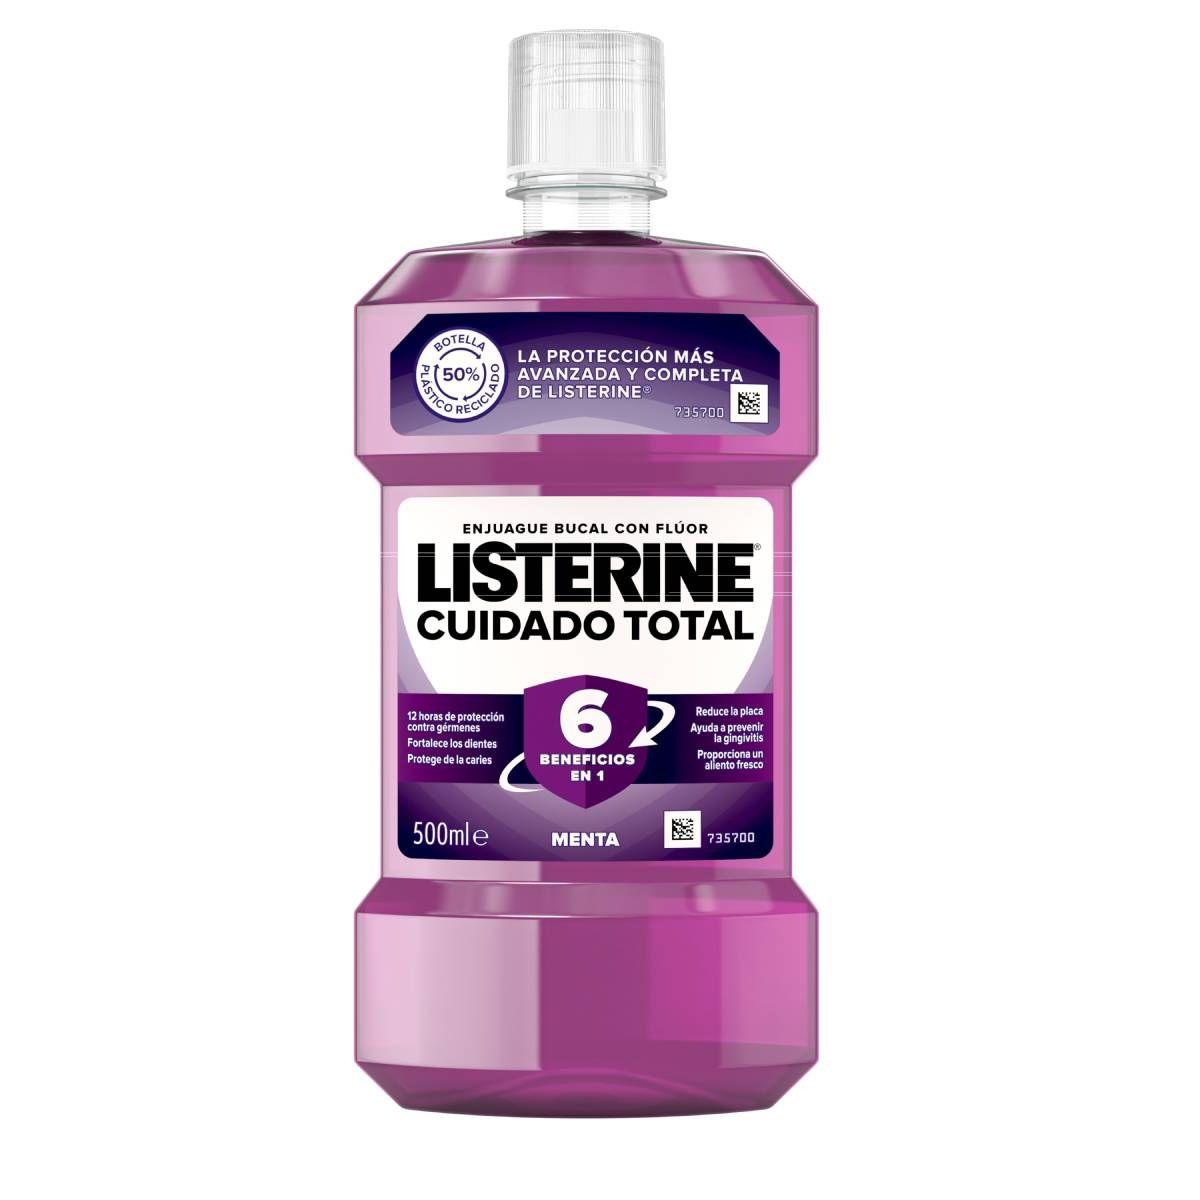 Listerine Cuidado Total